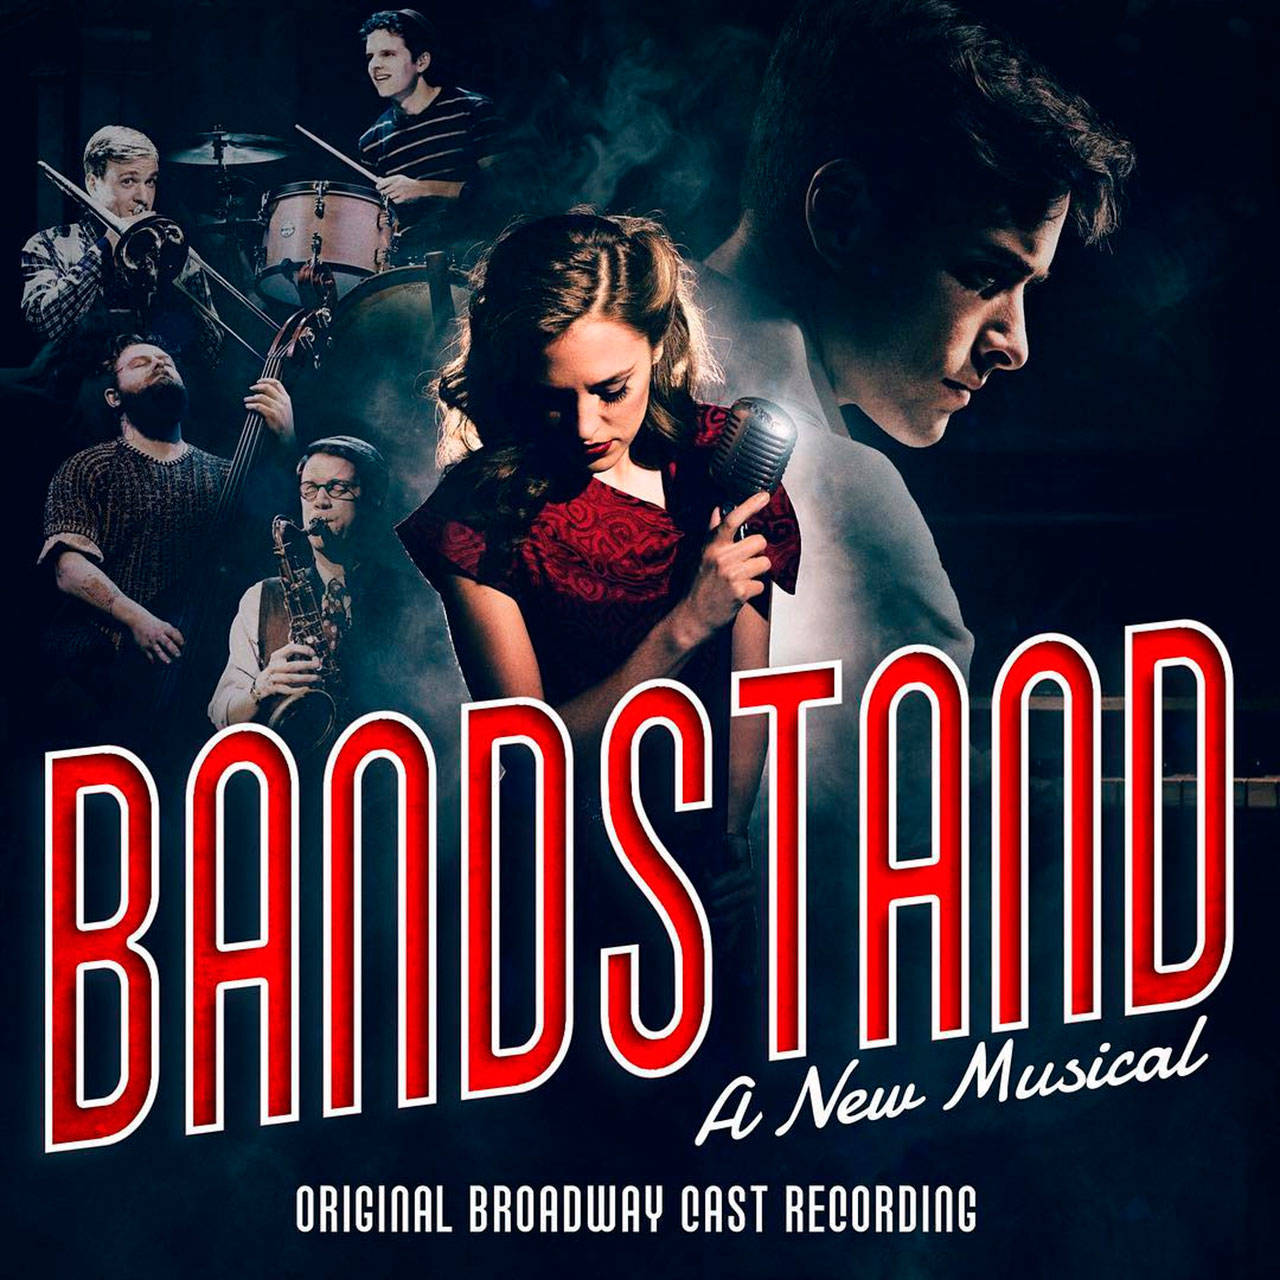 Image courtesy of Bainbridge Cinemas | “Bandstand” will play at Bainbridge Cinemas at 7 p.m. Thursday, June 28.